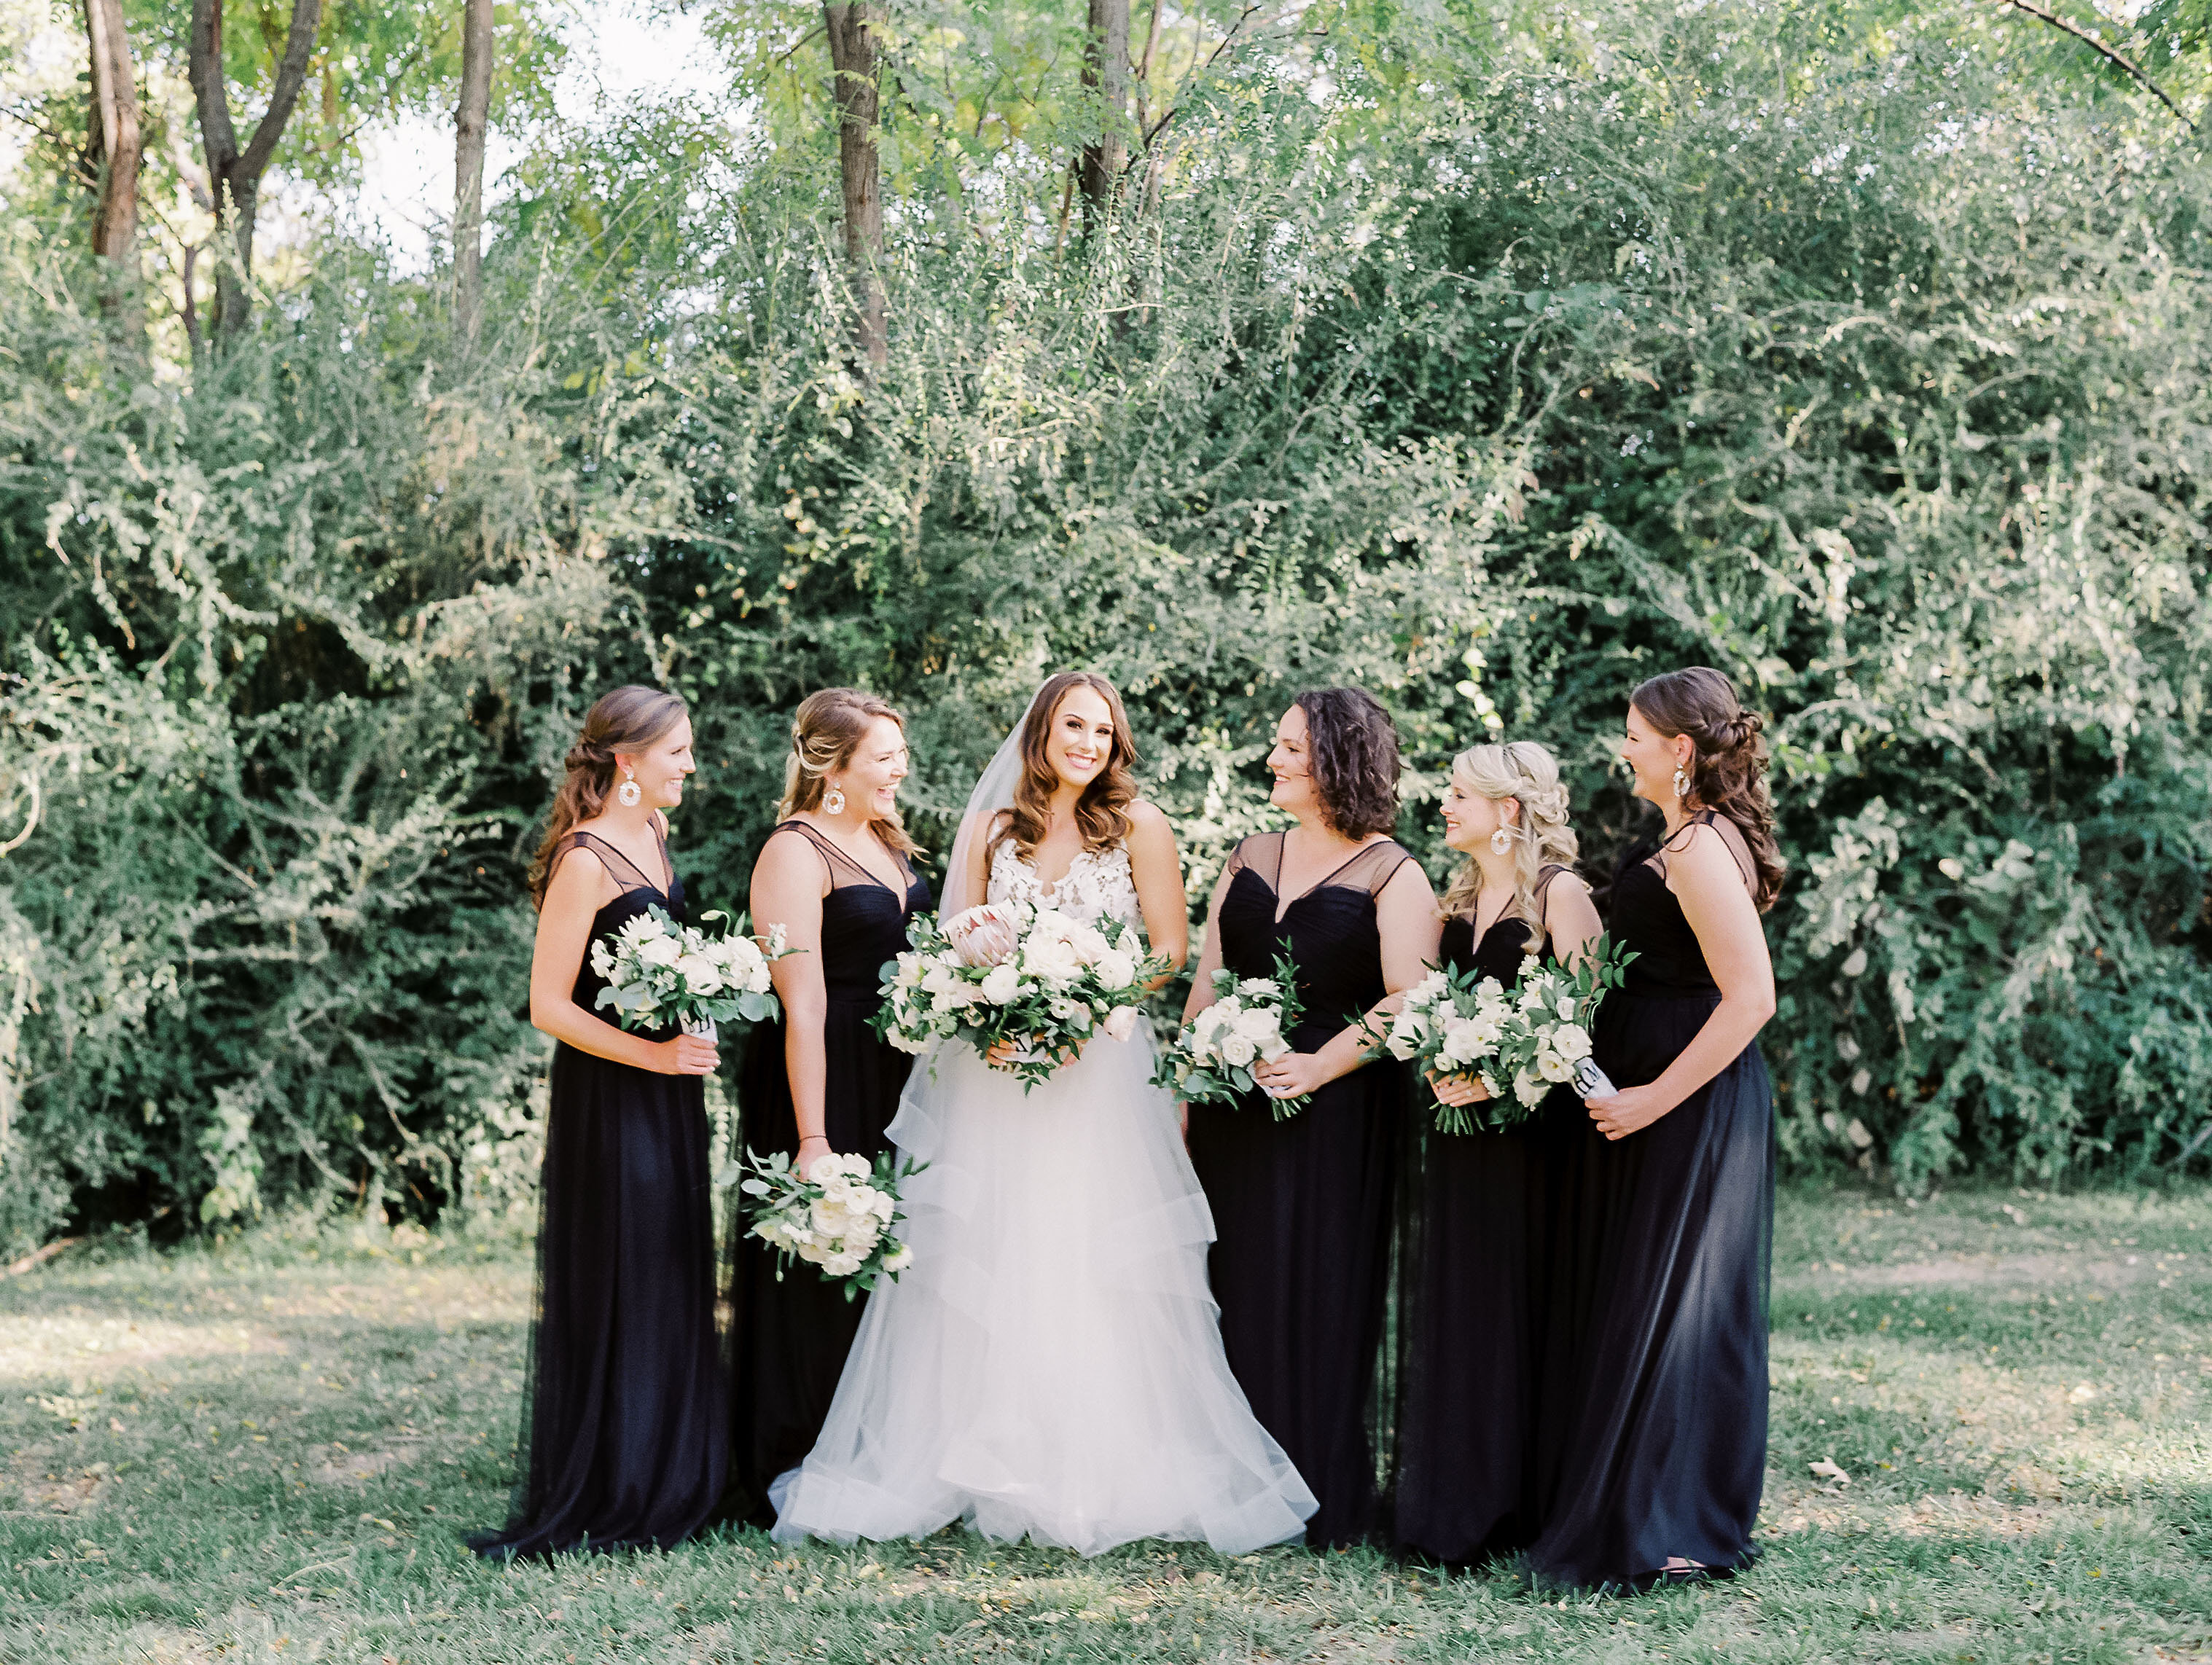 Bridesmaids in Black Dresses